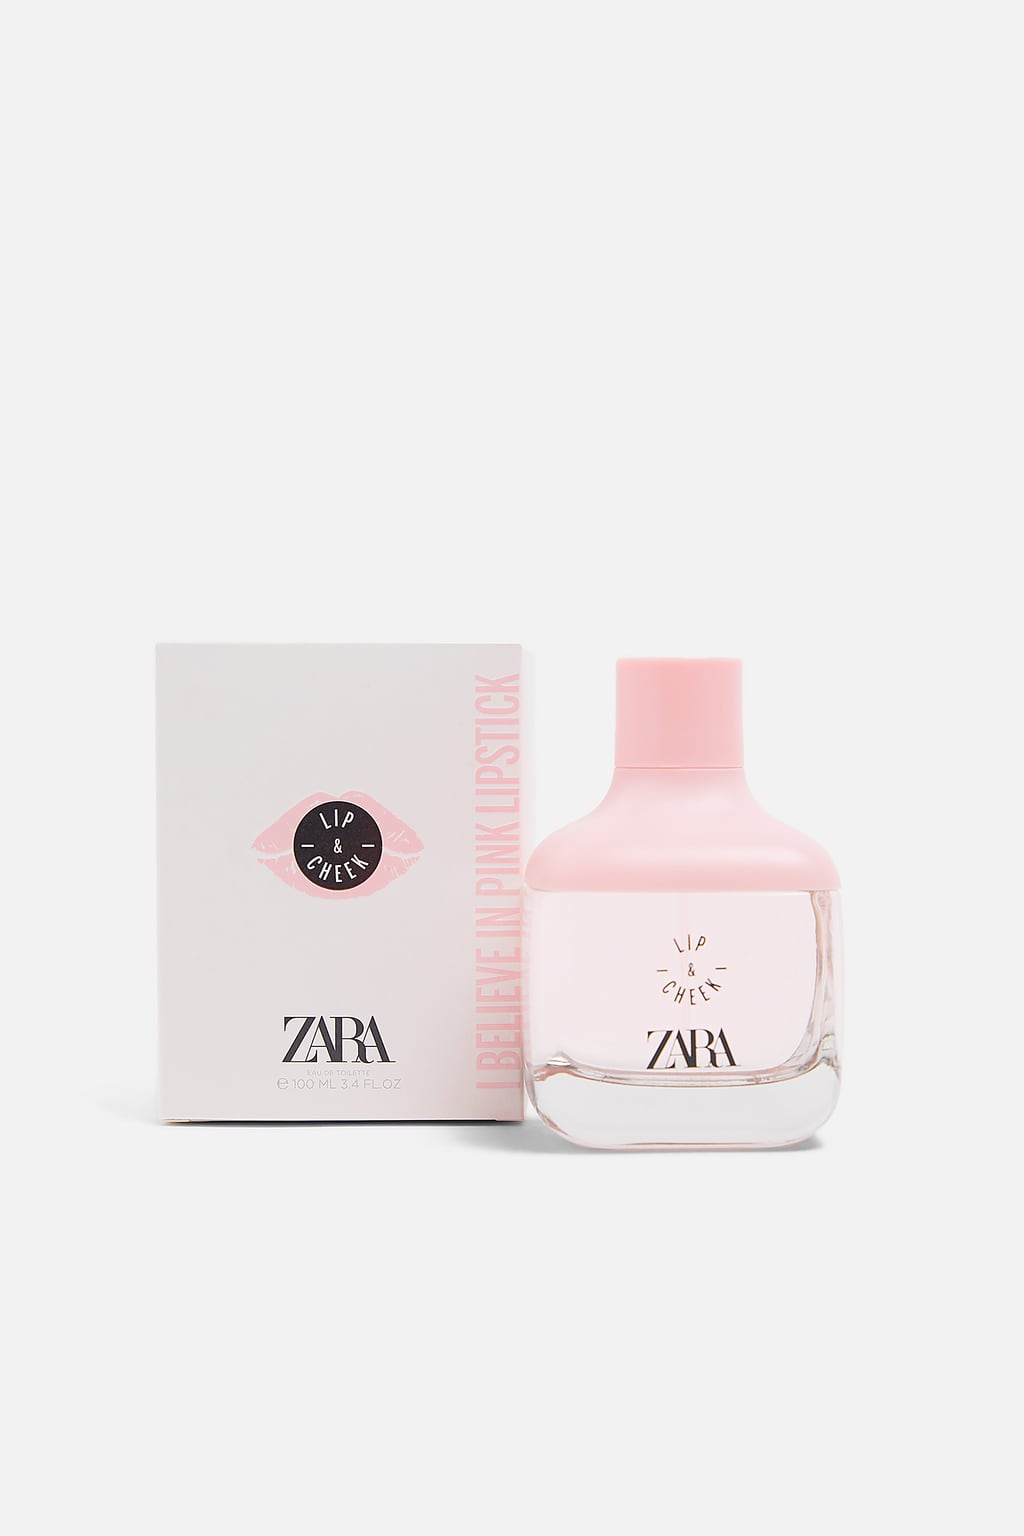 Zara Lip & Cheek Eau de Toilette